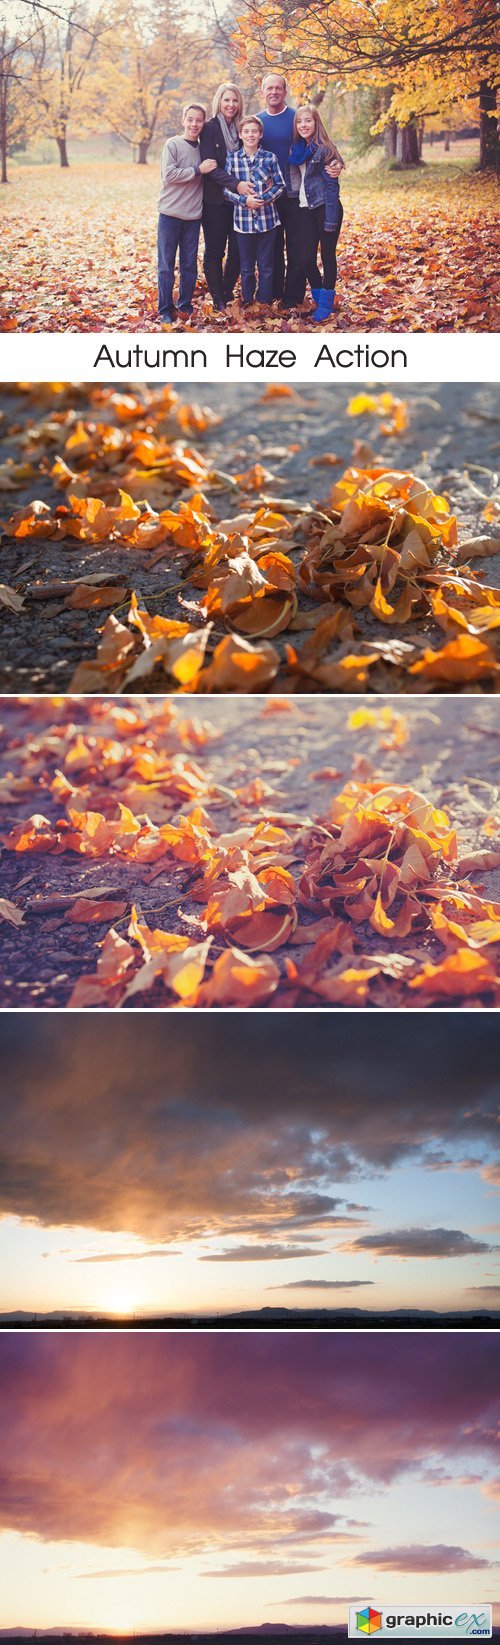 Photoshop Action - Autumn Haze